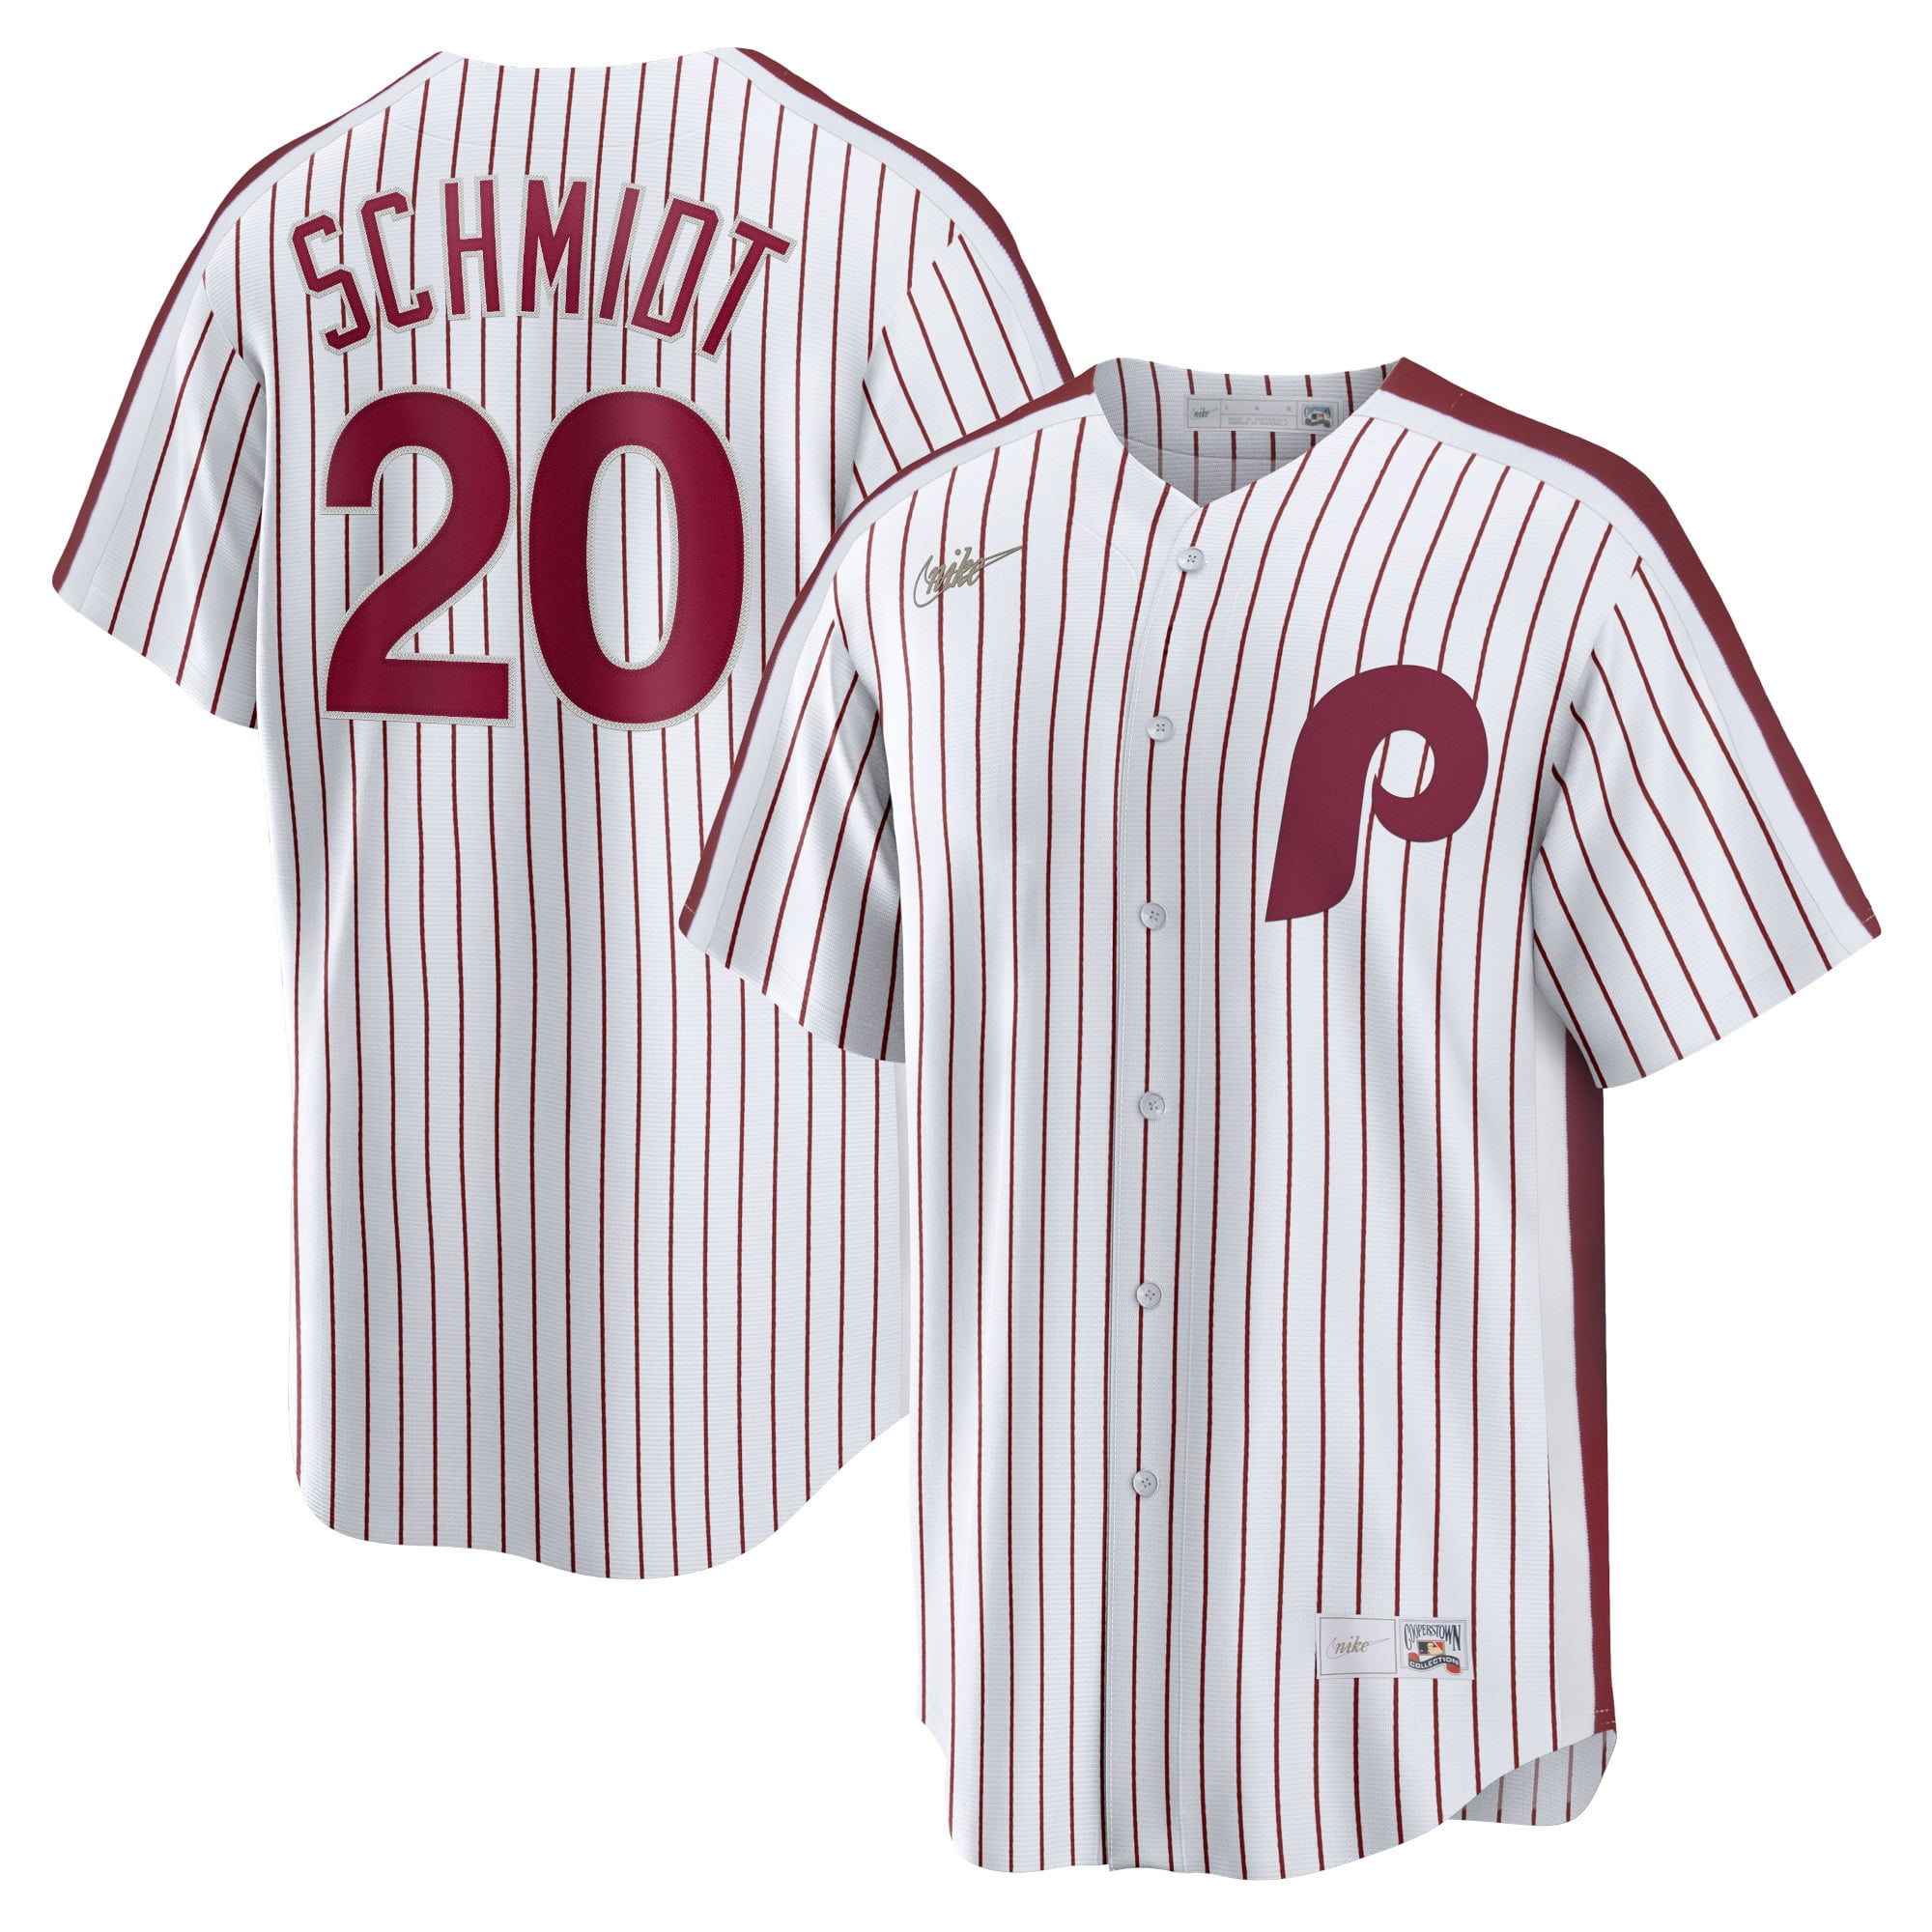 Autographed/Signed Mike Schmidt Philadelphia Pinstripe Baseball